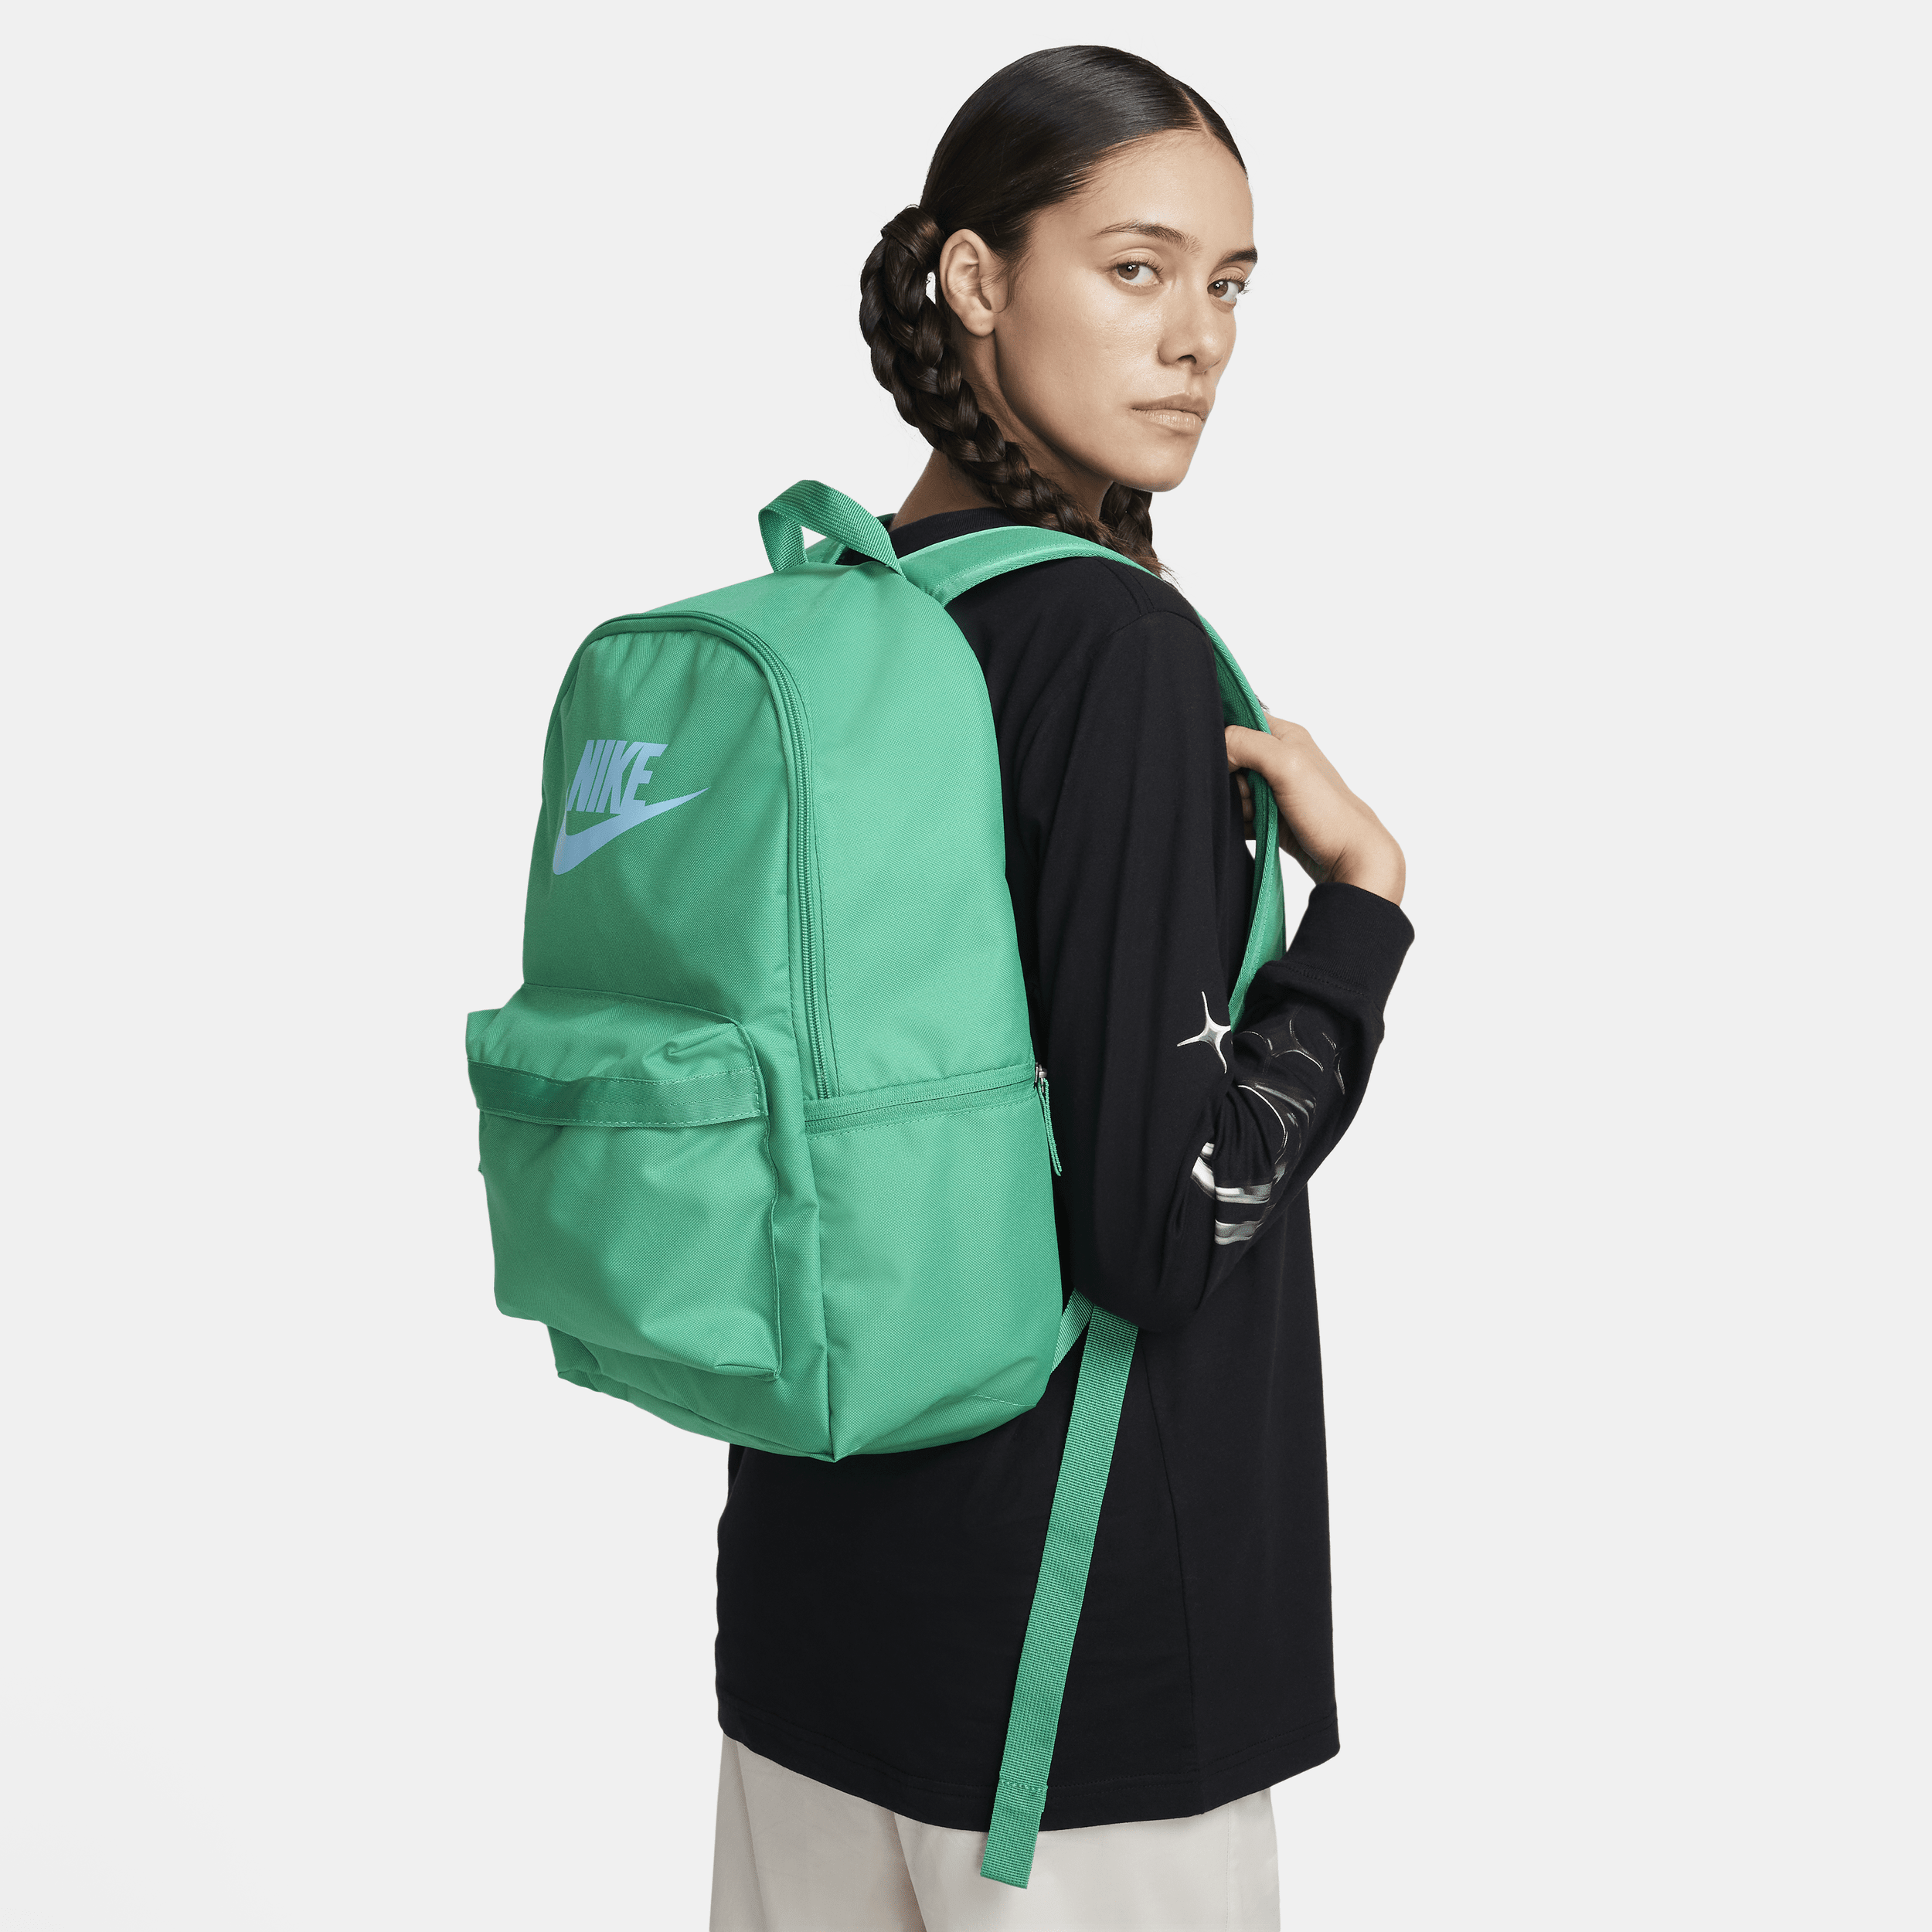 Nike Heritage-rygsæk (25 liter) - grøn